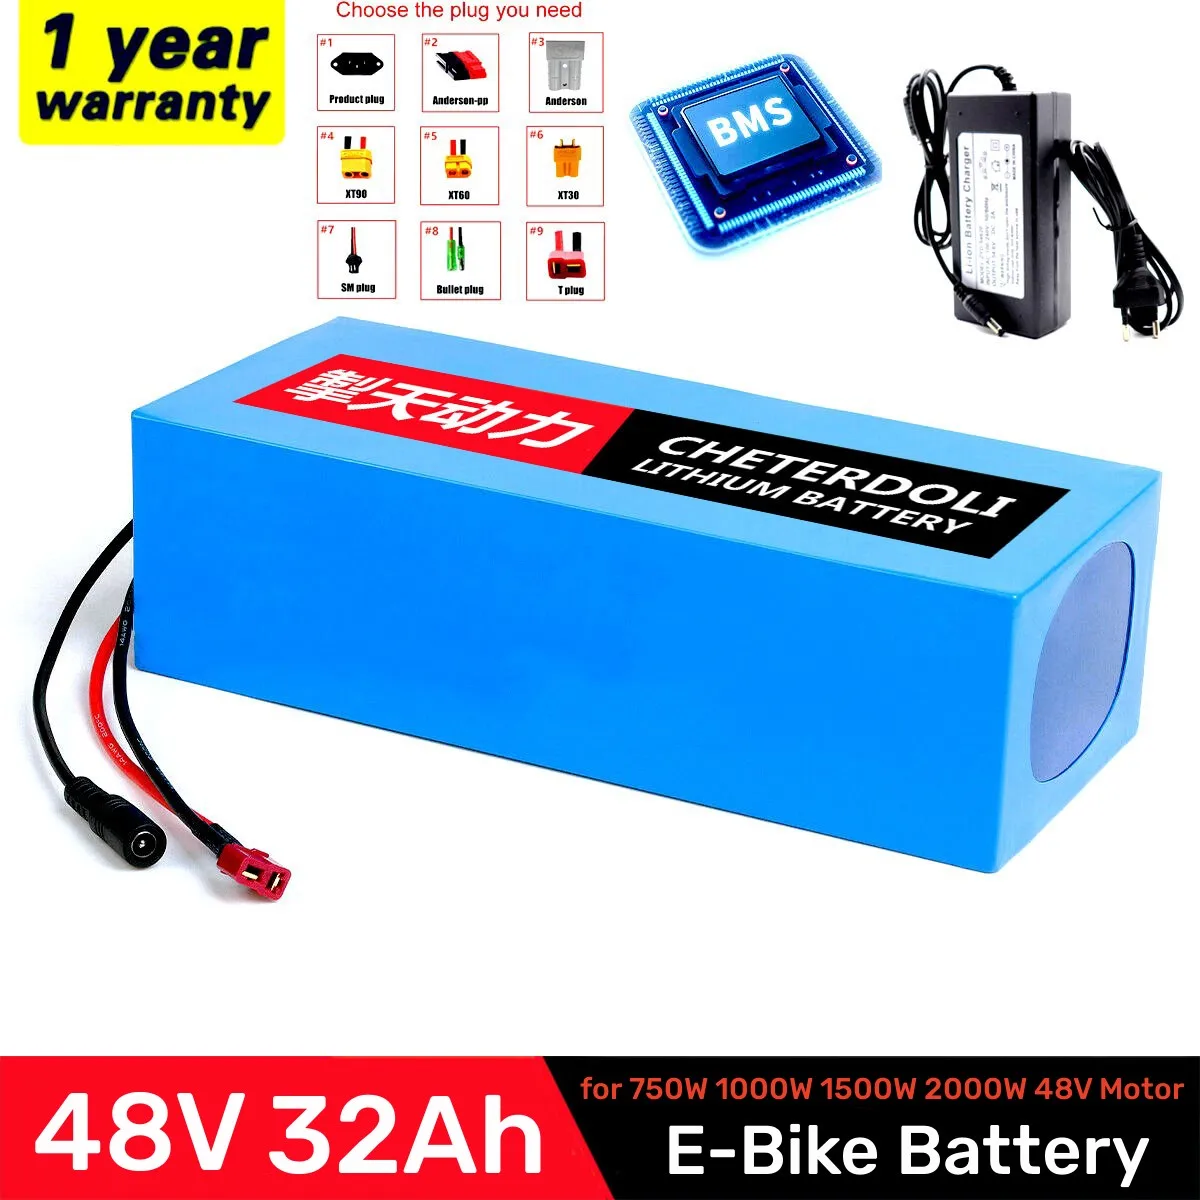 

Cheterdoli 48V 32ah 1500W electric bike battery 48V 20ah 24ah 18ah 15ah 18650 lithium batteries for 54.6v750W 1000W ebike motor